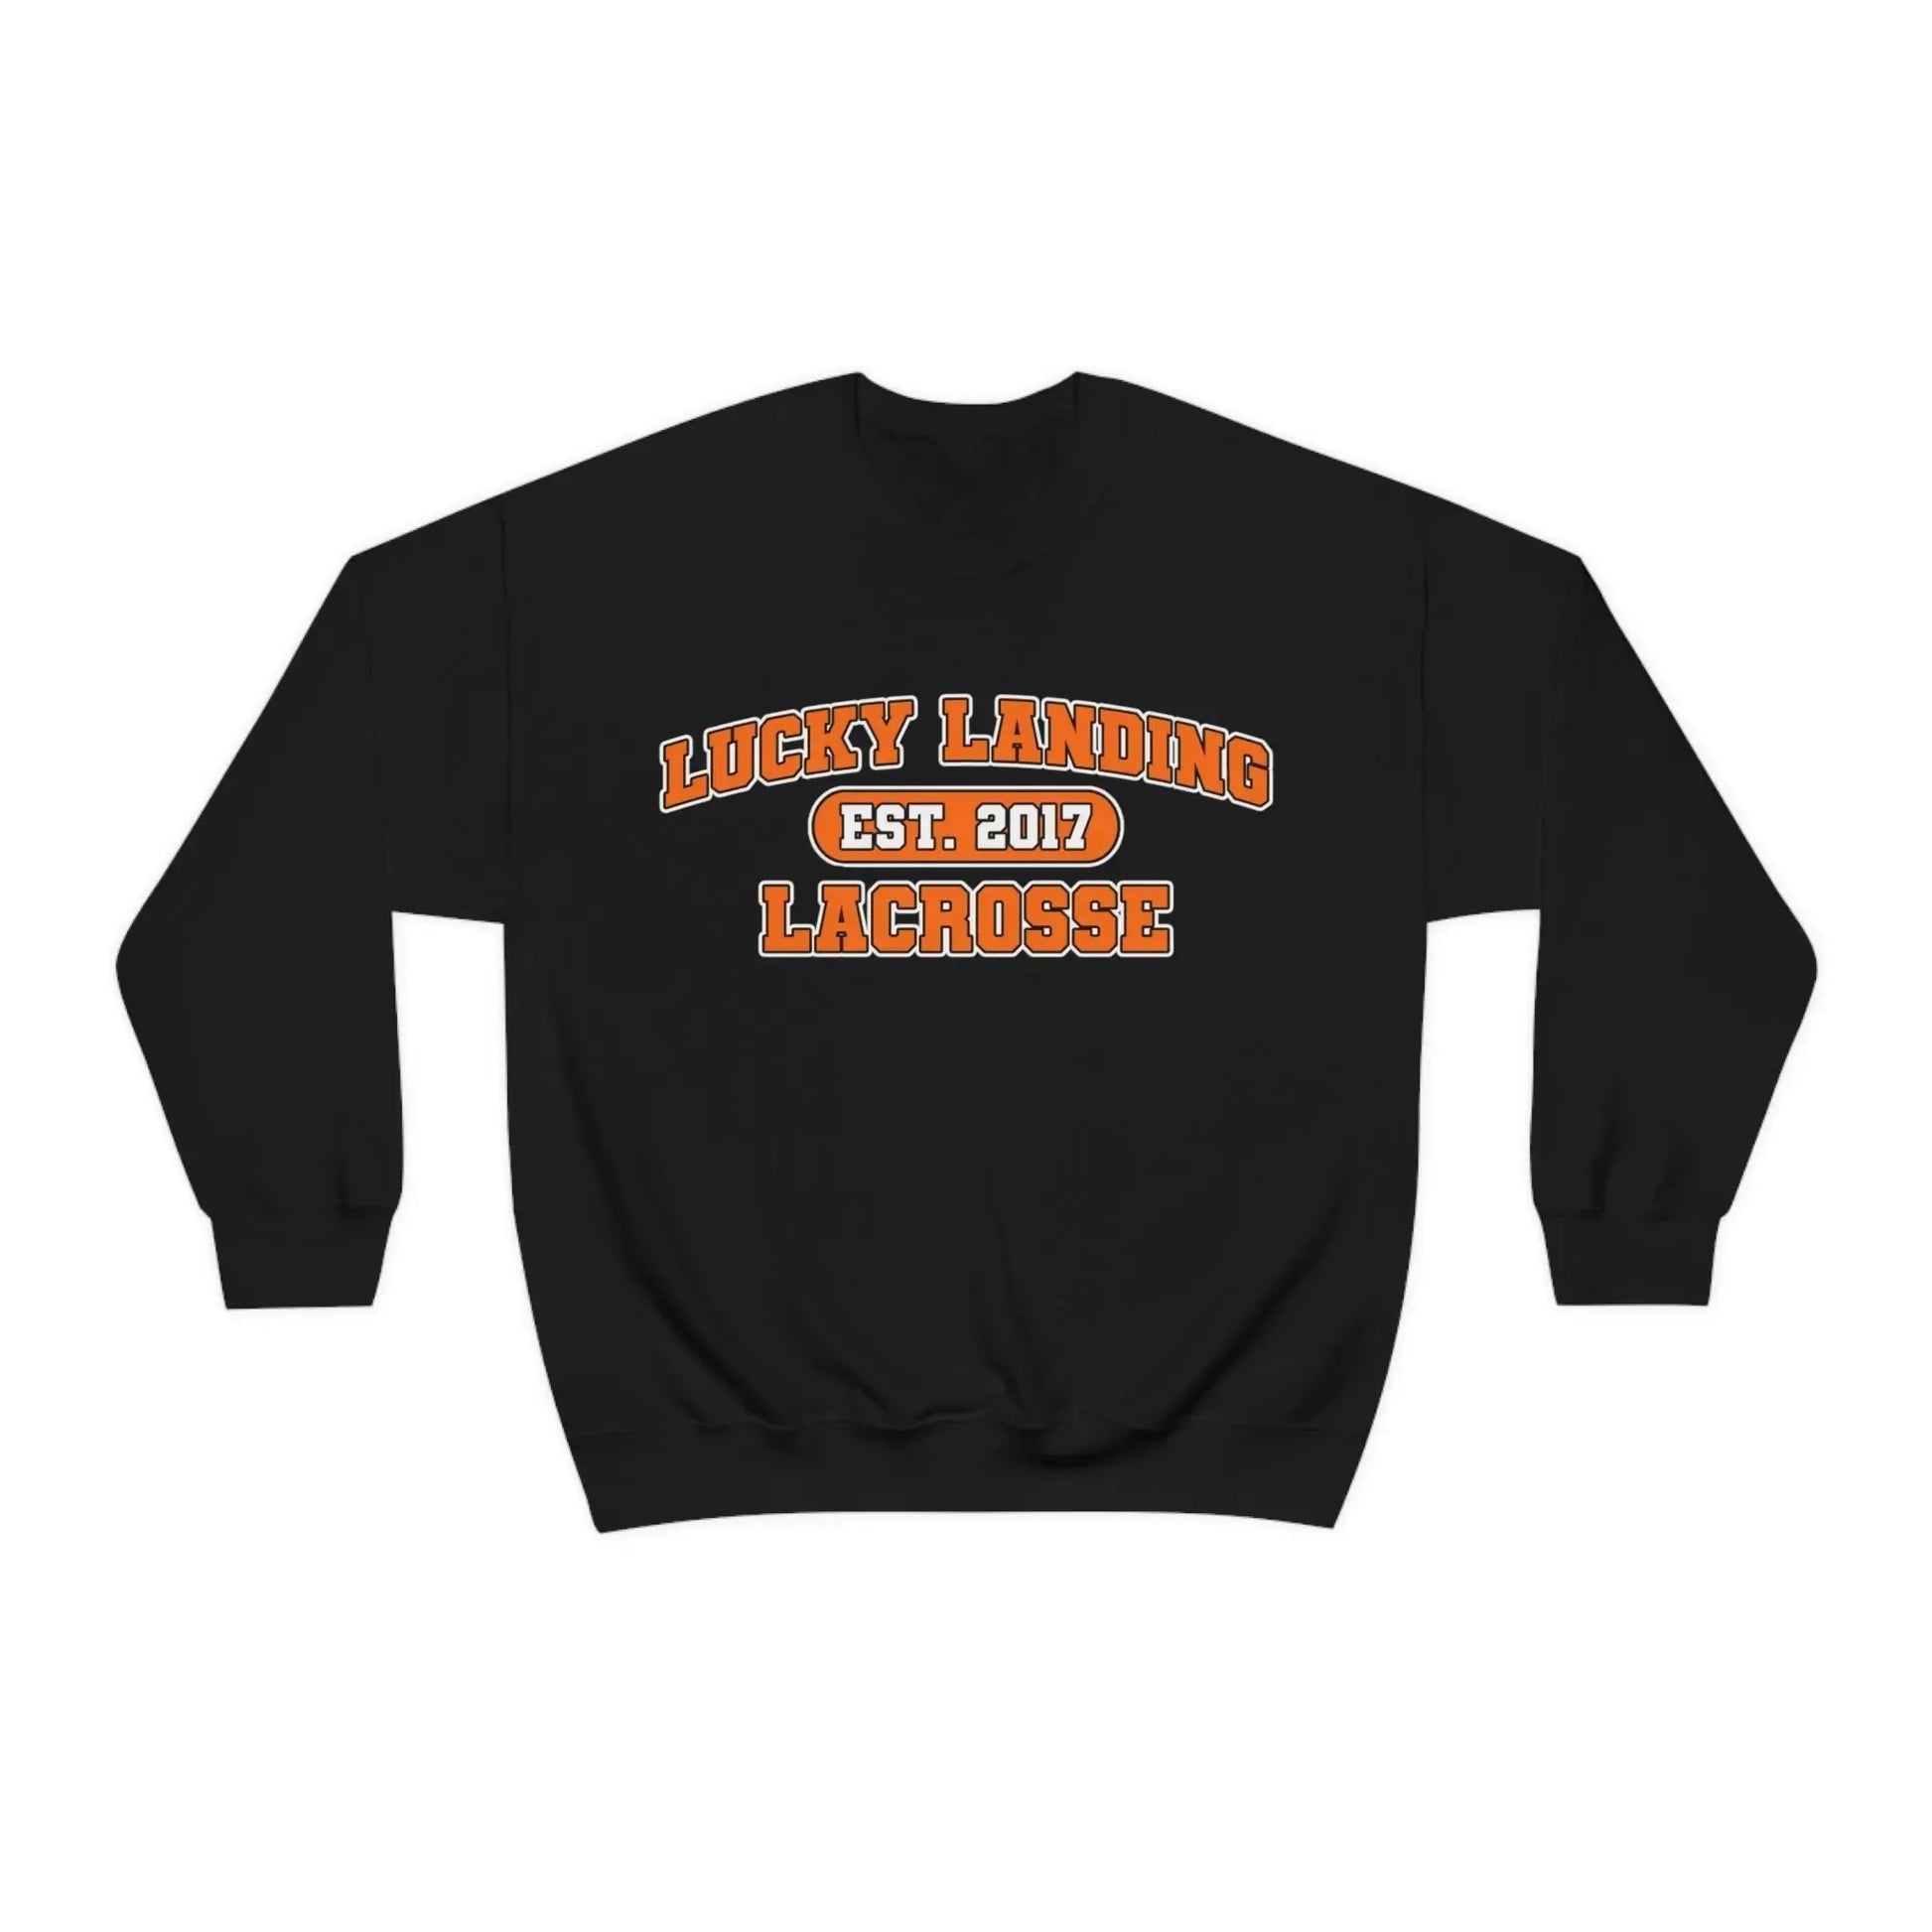 Lucky Landing Lacrosse Sweatshirt - Failure International failureinternational.com store brand tiktok instagram